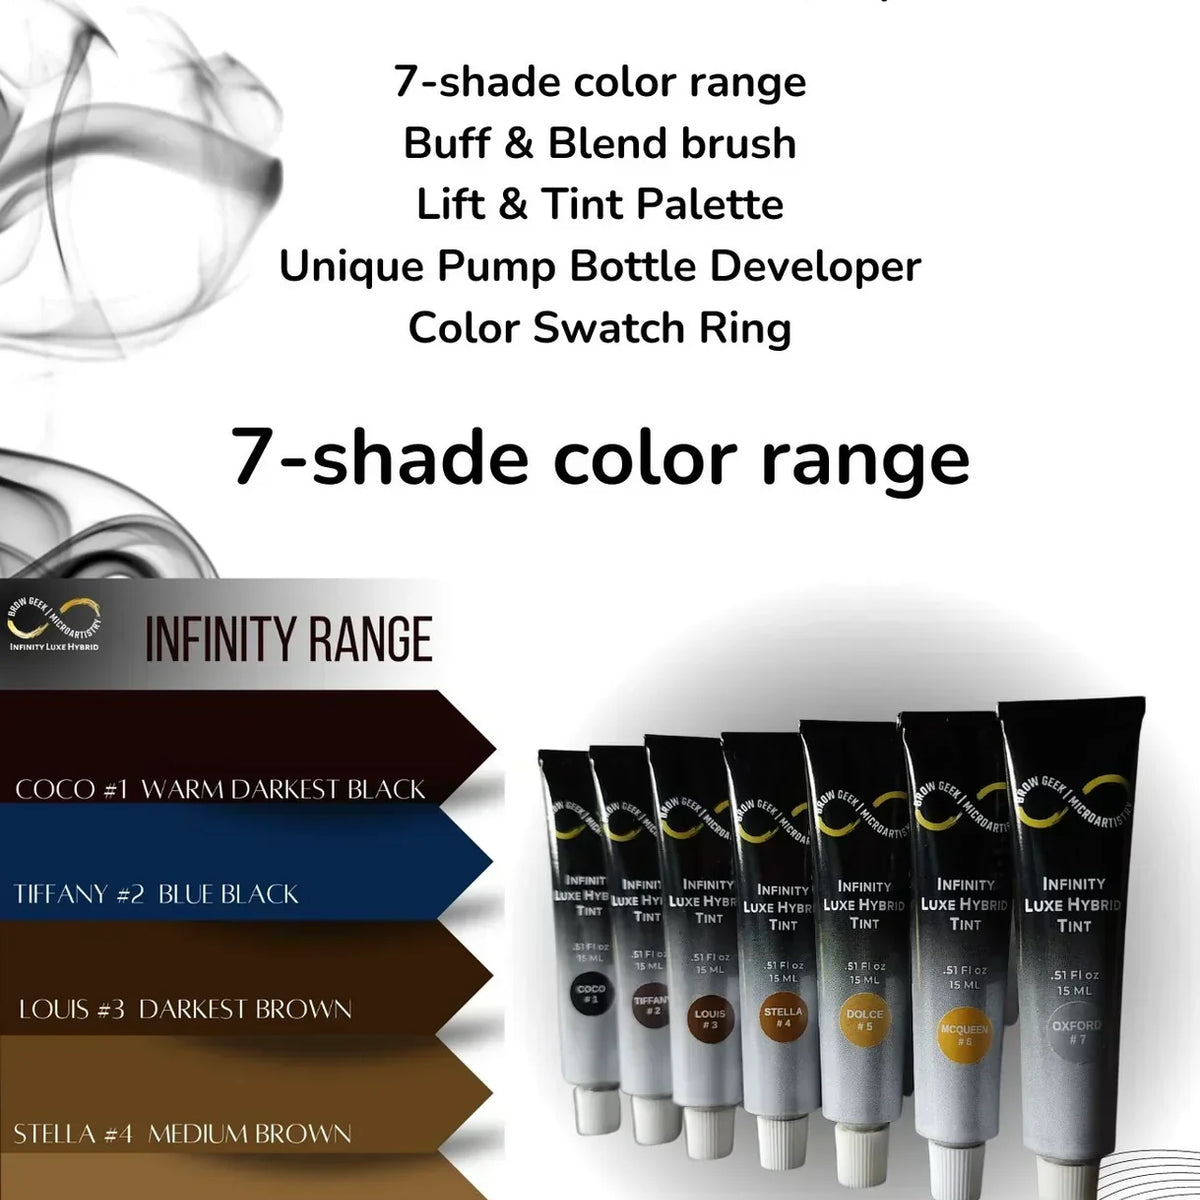 Infinity Luxe Hybrid Tint Kit- Gold Kit - Wholesale 60